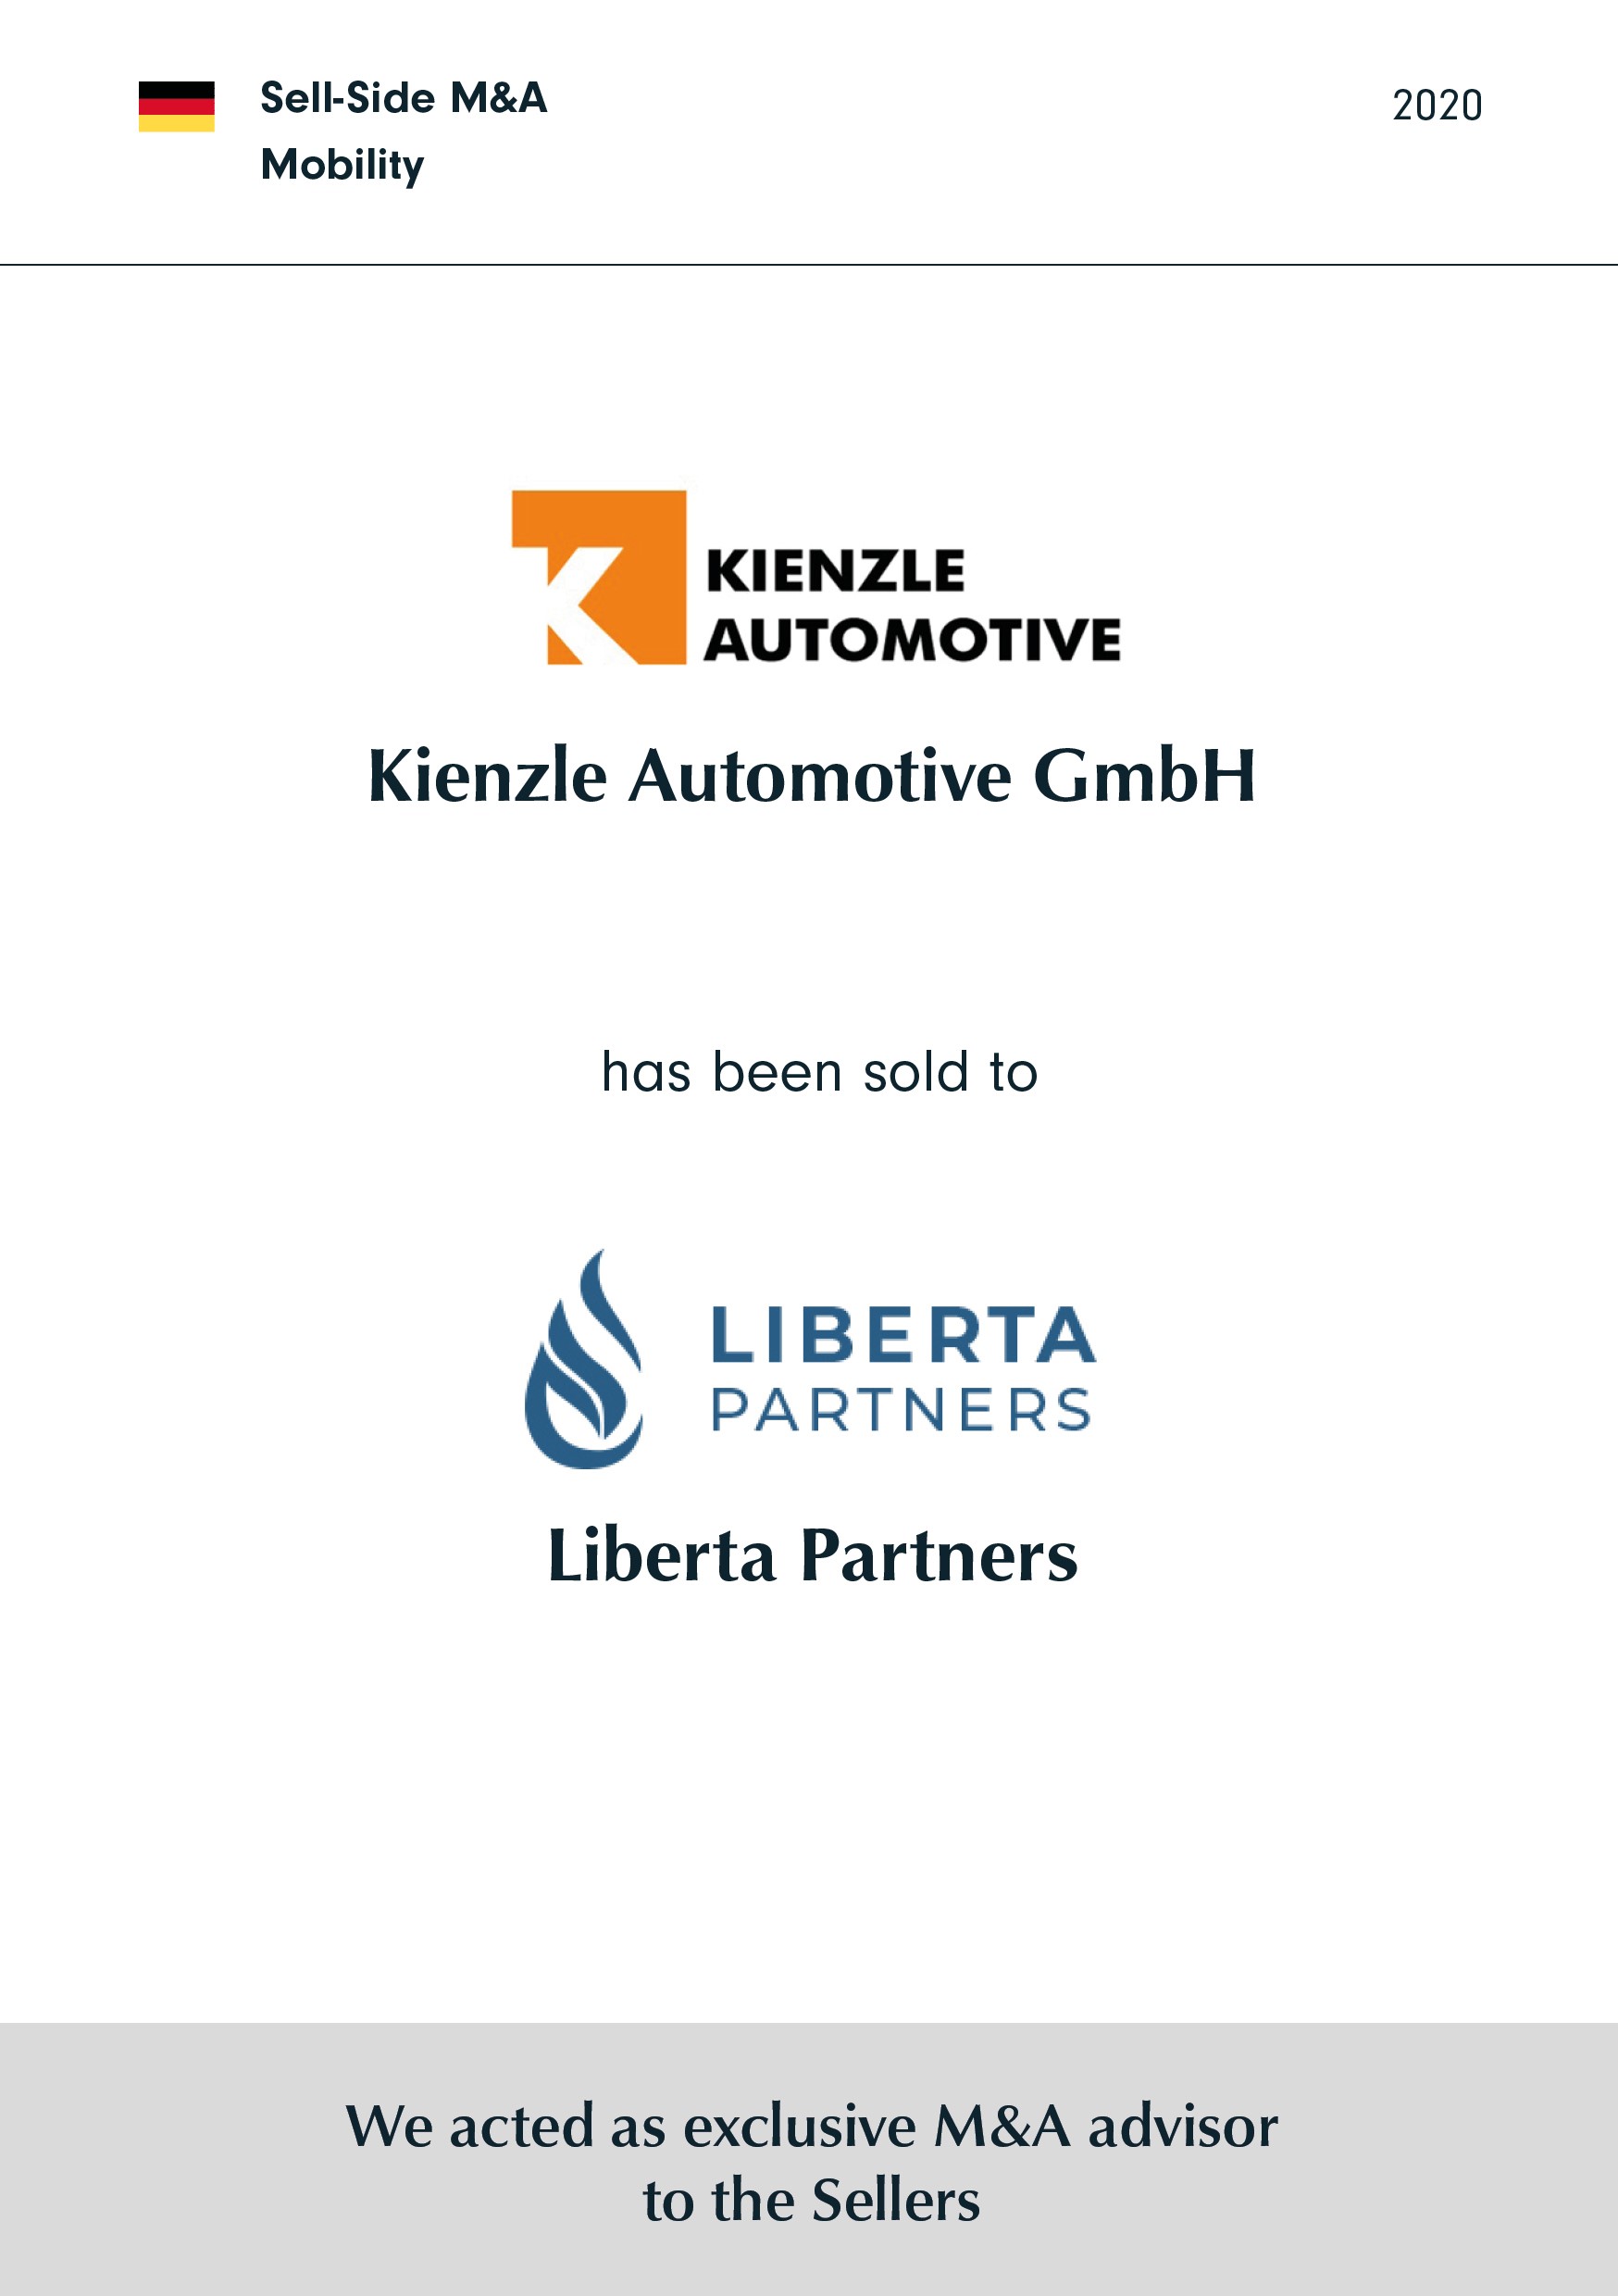 BELGRAVIA & CO. advised  Kienzle Automotive GmbH on its sale to Liberta Partners